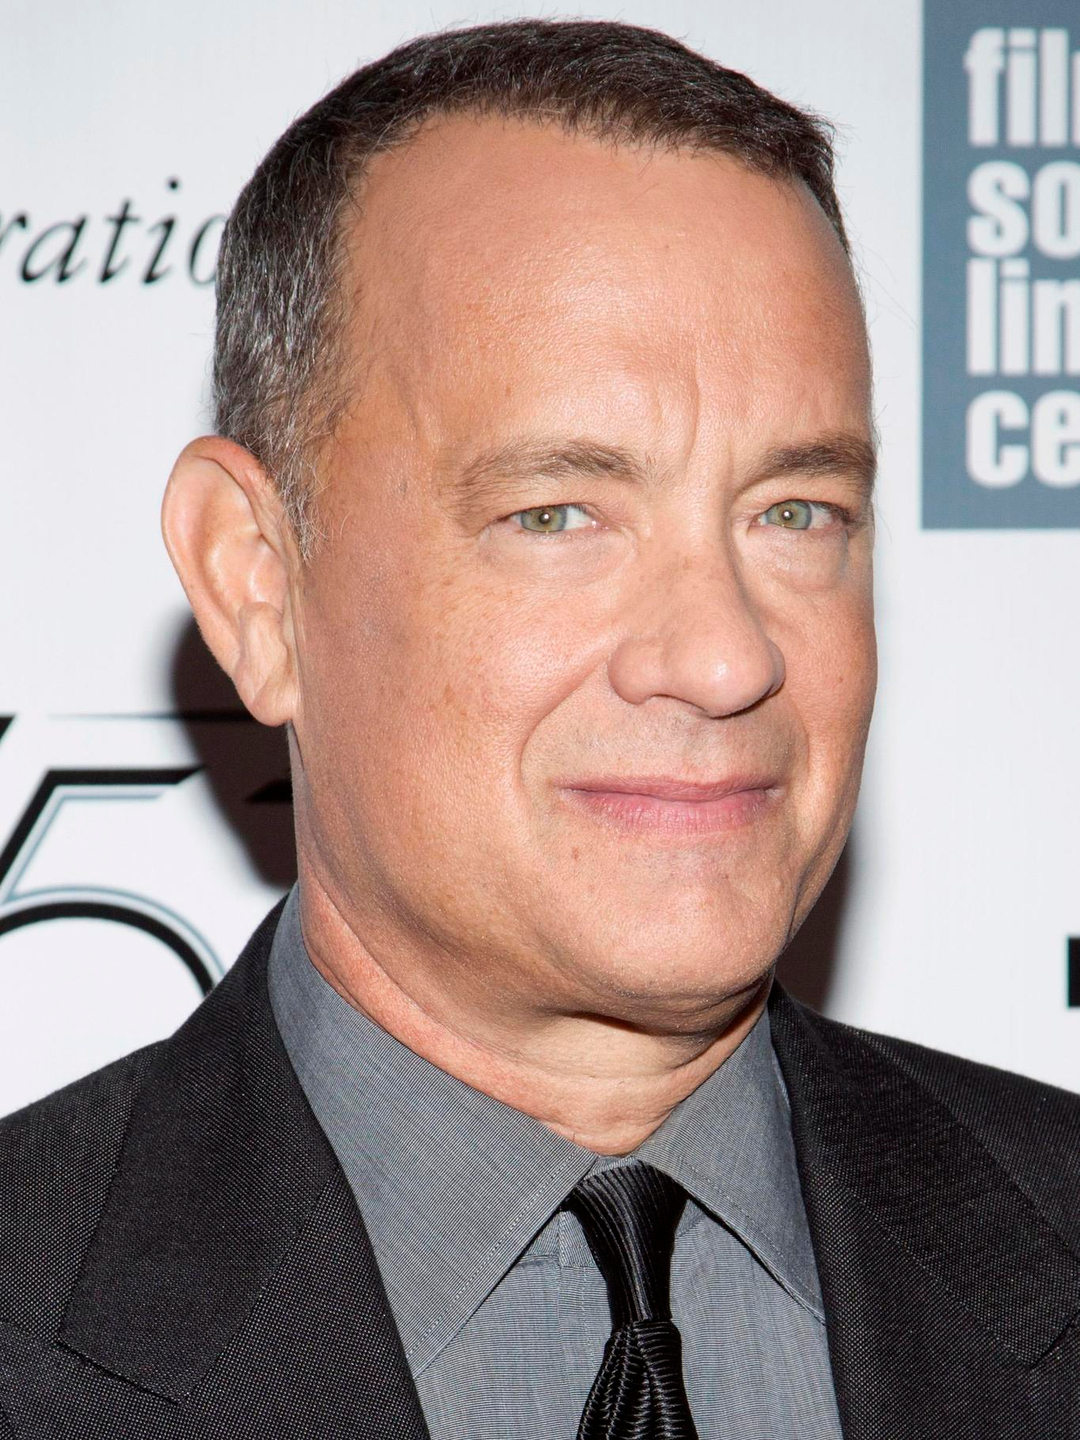 Tom Hanks current look